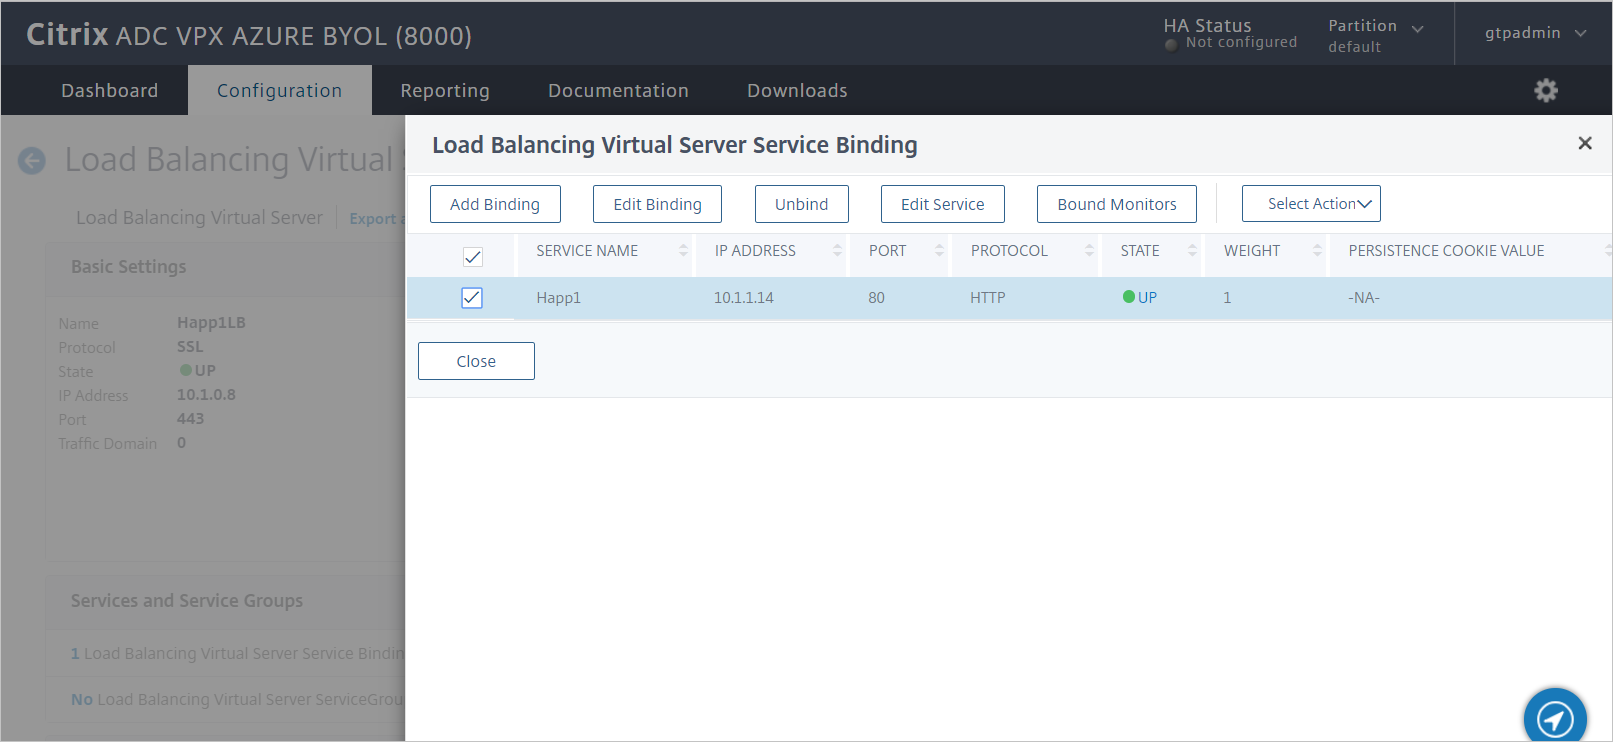 Citrix ADC SAML Connector for Azure AD configuration - Verify the virtual server services binding